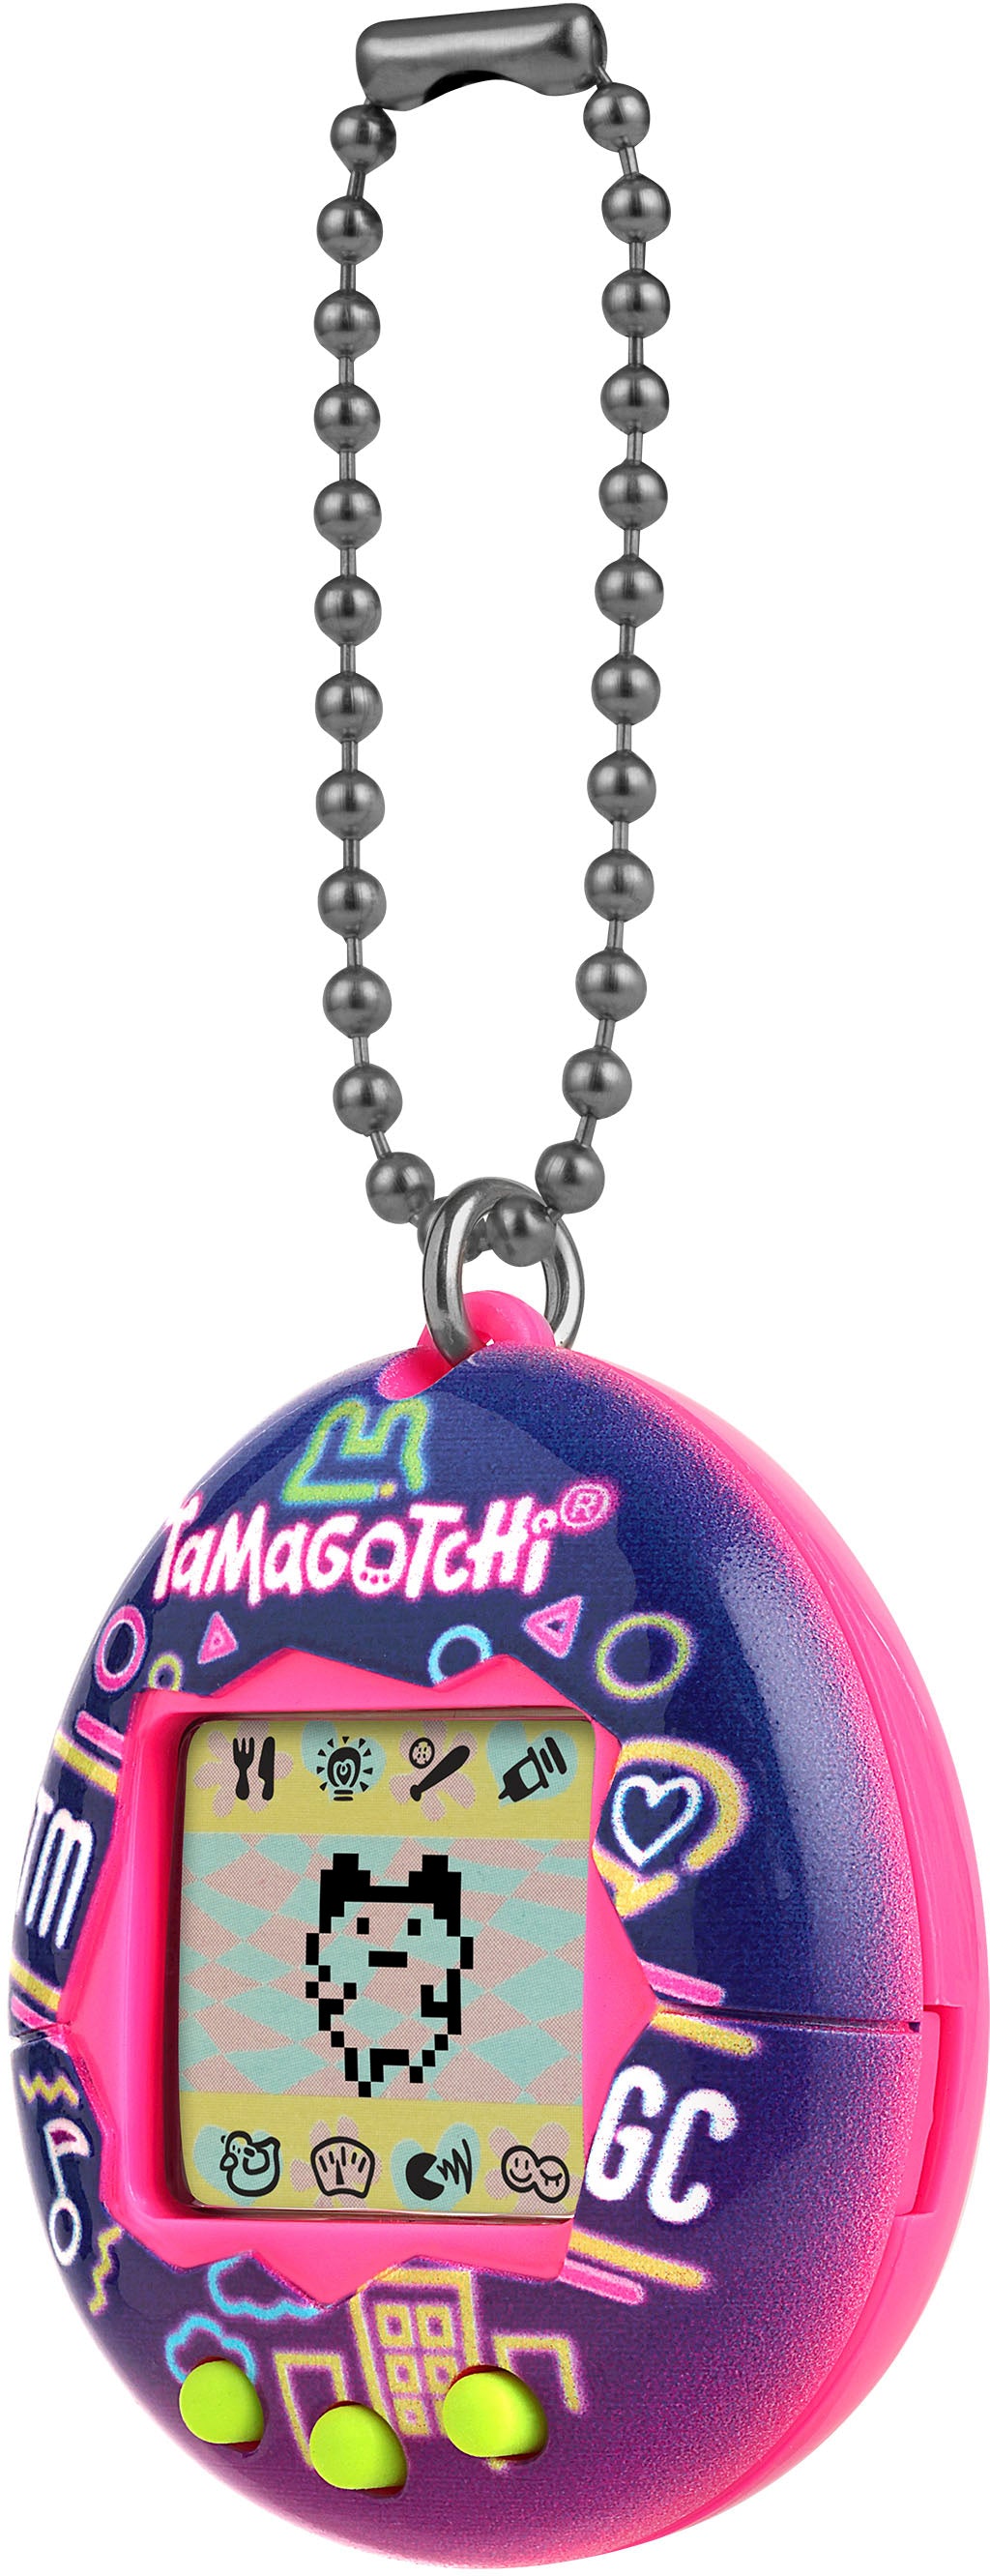 Bandai - Original Tamagotchi - Neon Lights_2